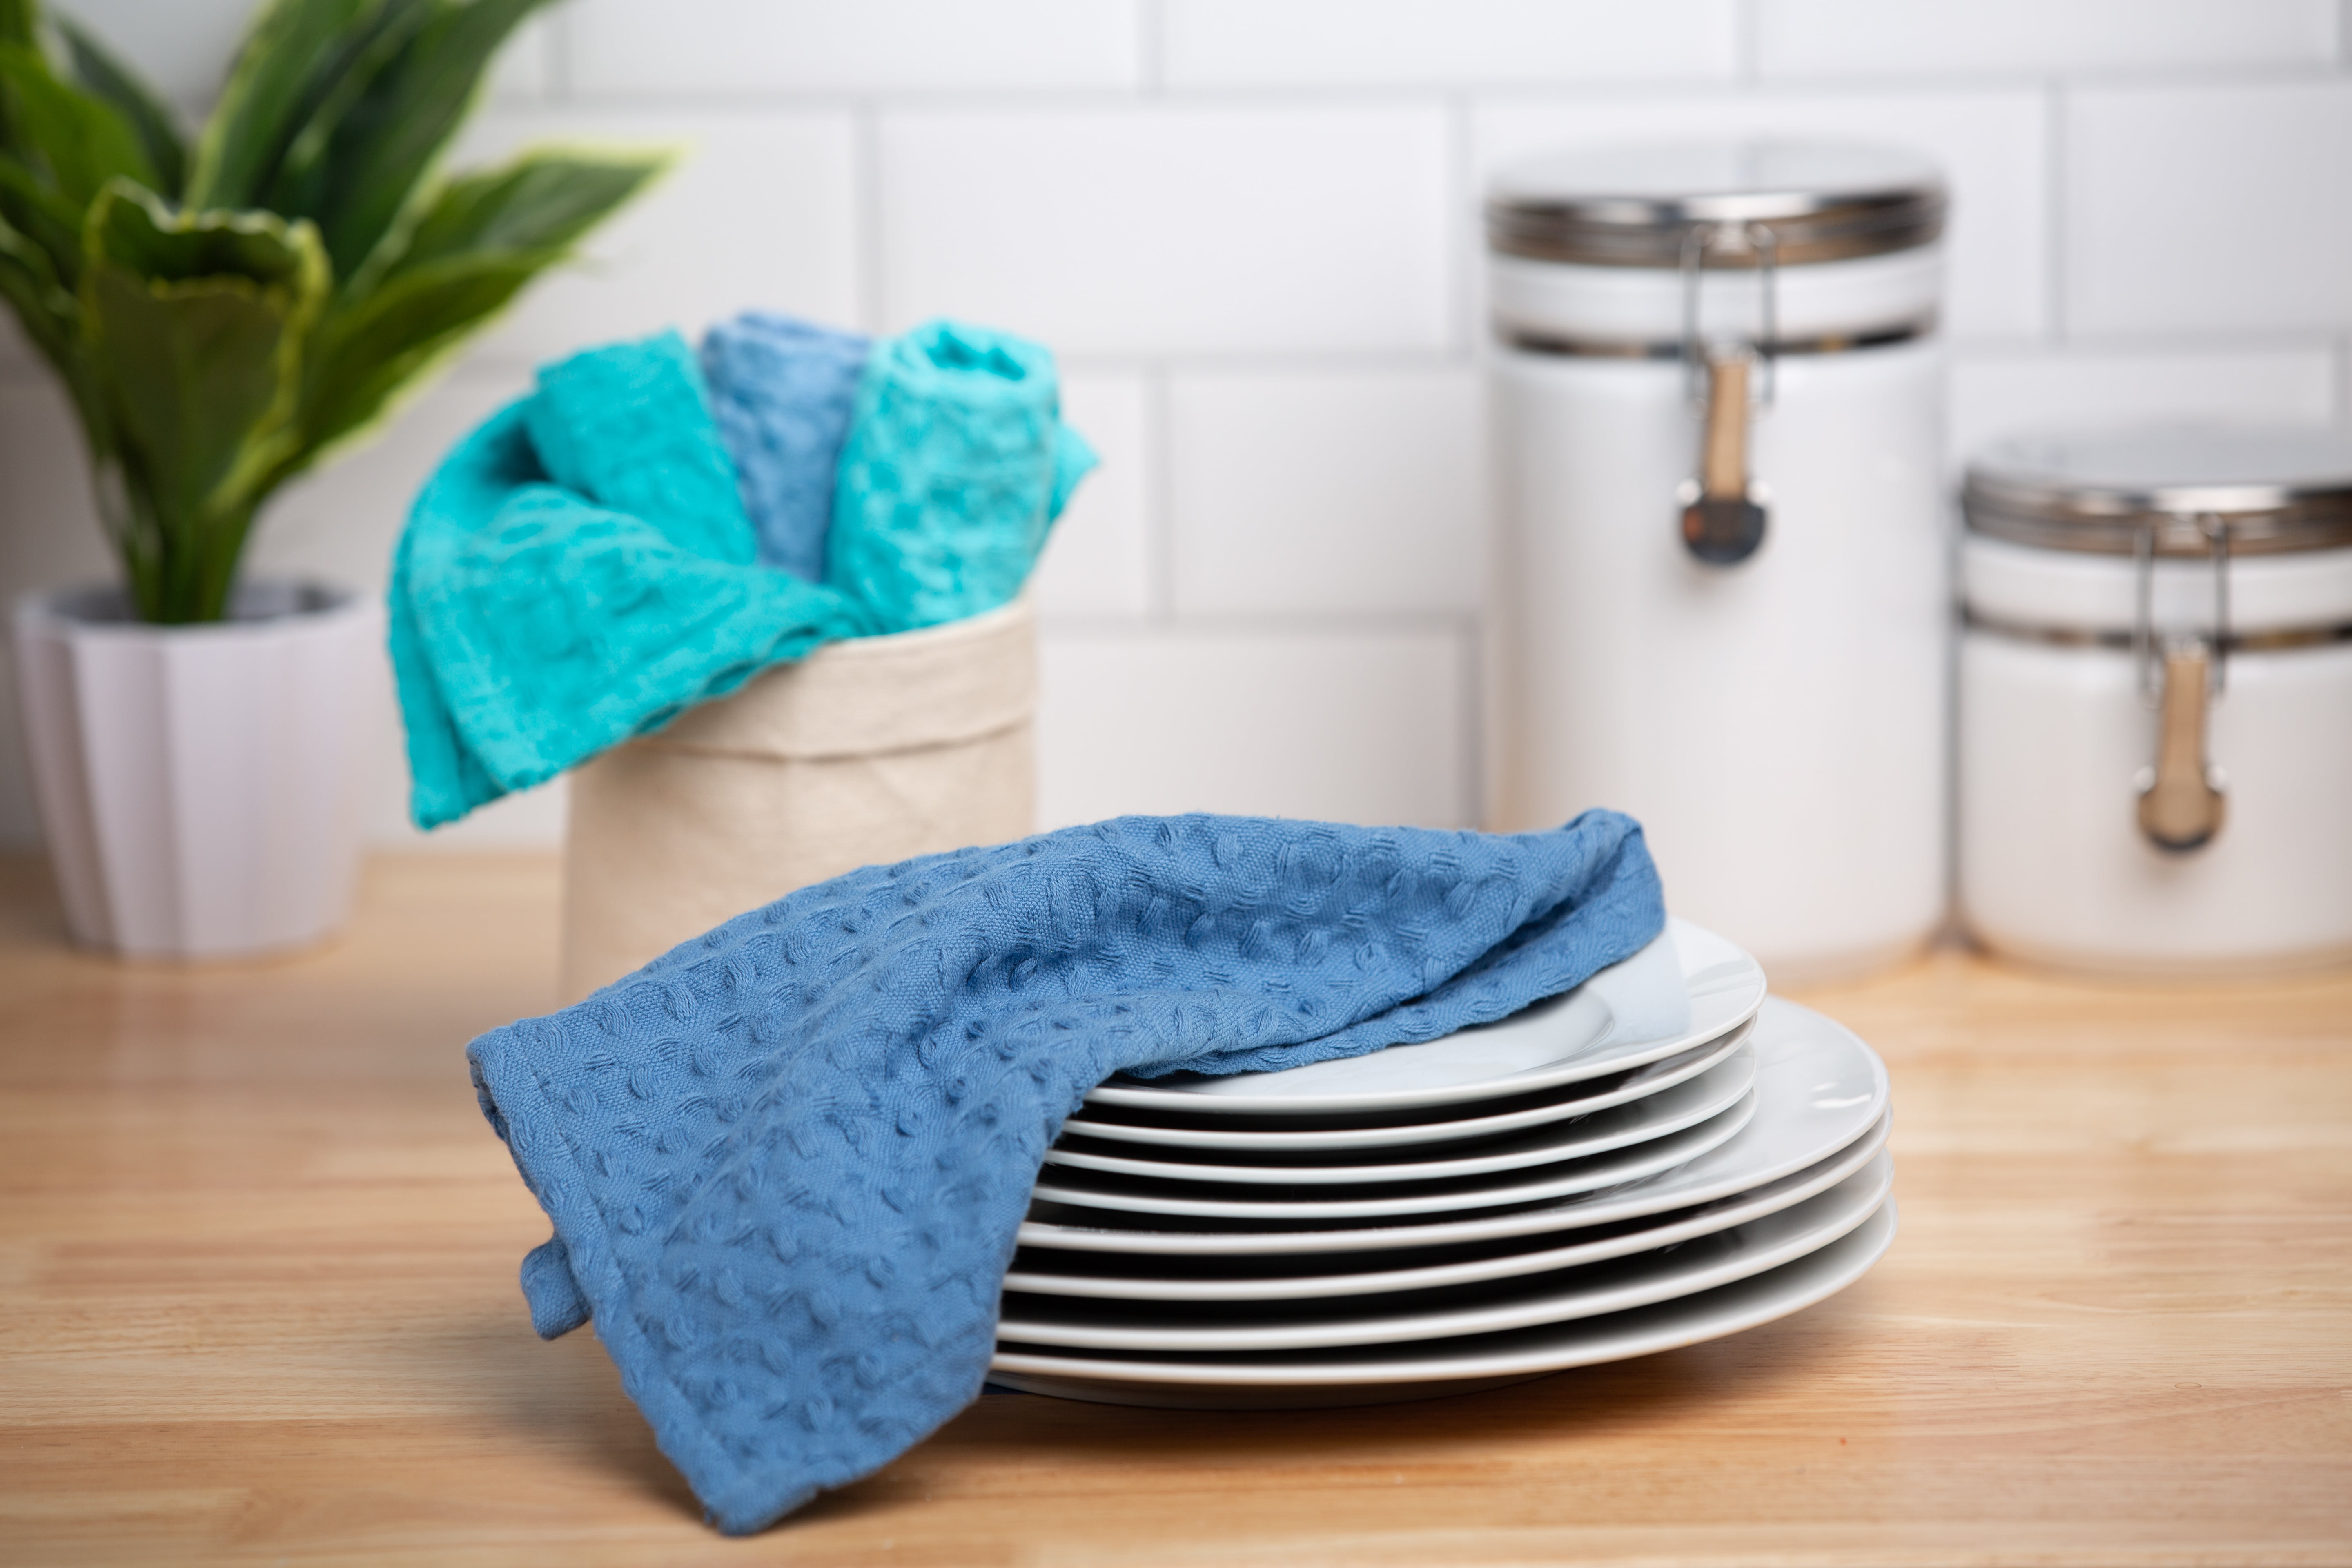 Mainstays 4-Pack 12”x12” Woven Kitchen Dish Cloth Set, Multi